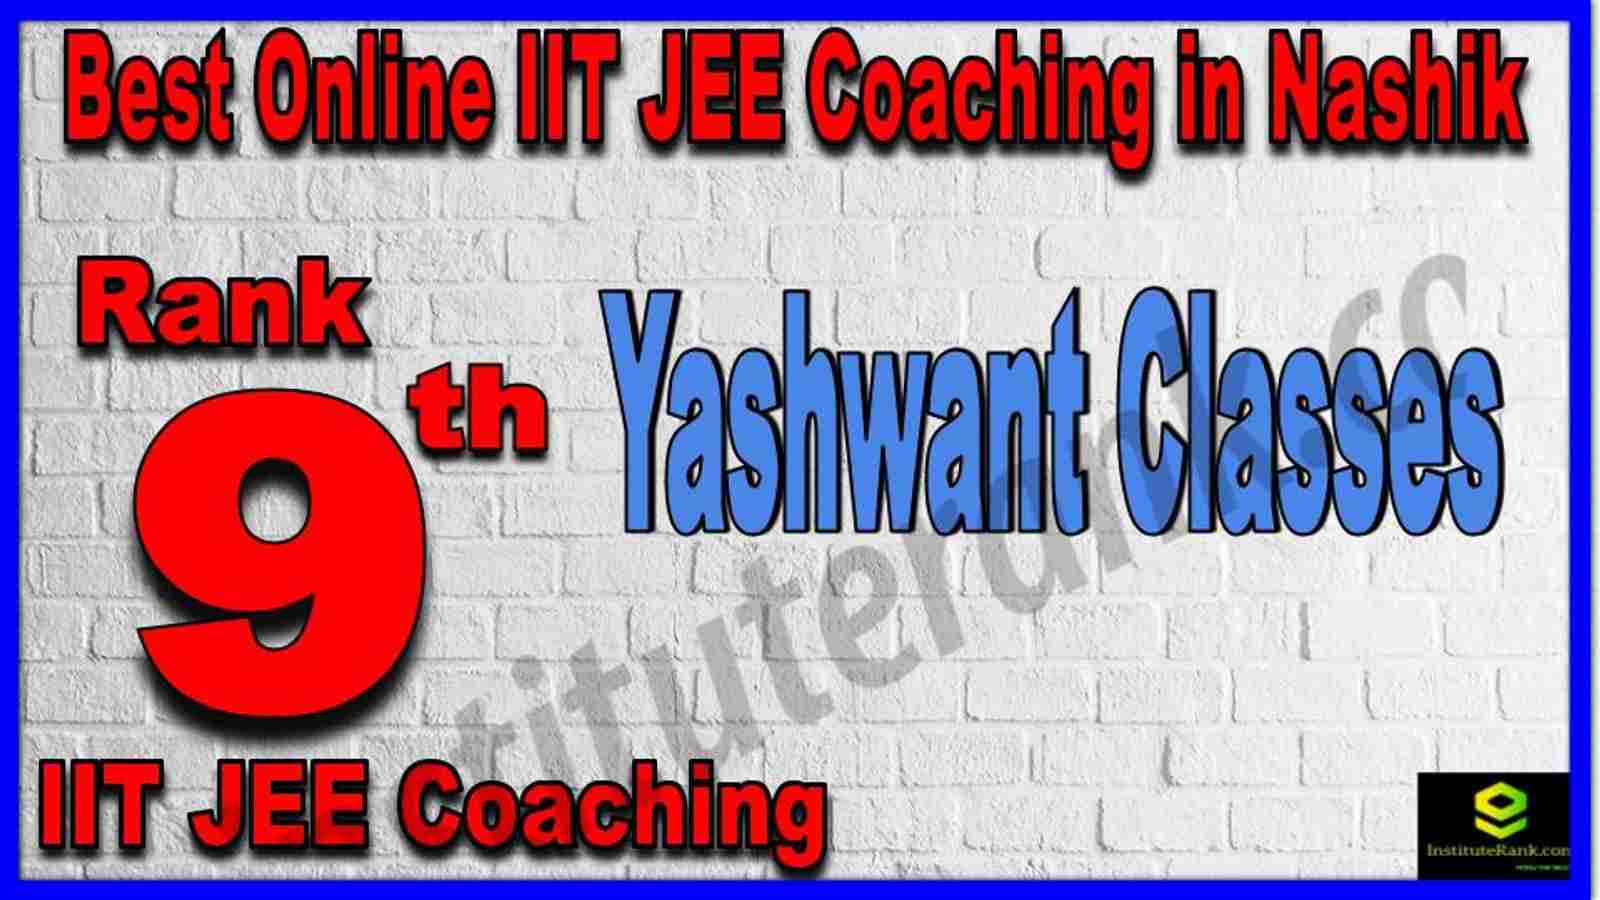 Rank 9th Best Online IIT JEE Coaching in Nashik